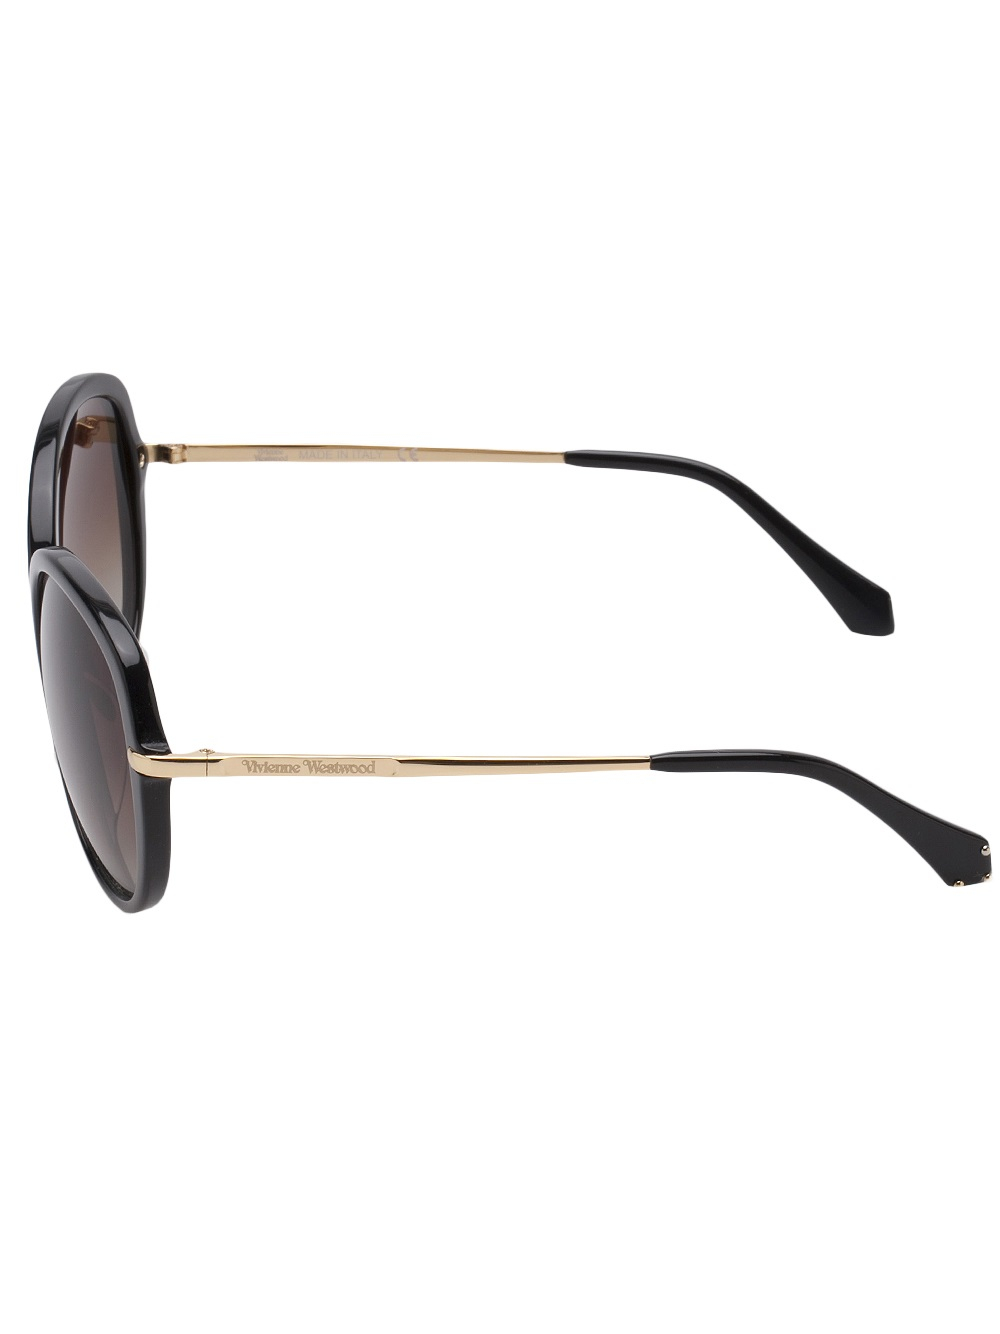 Vivienne Westwood Round Sunglasses in Black - Lyst